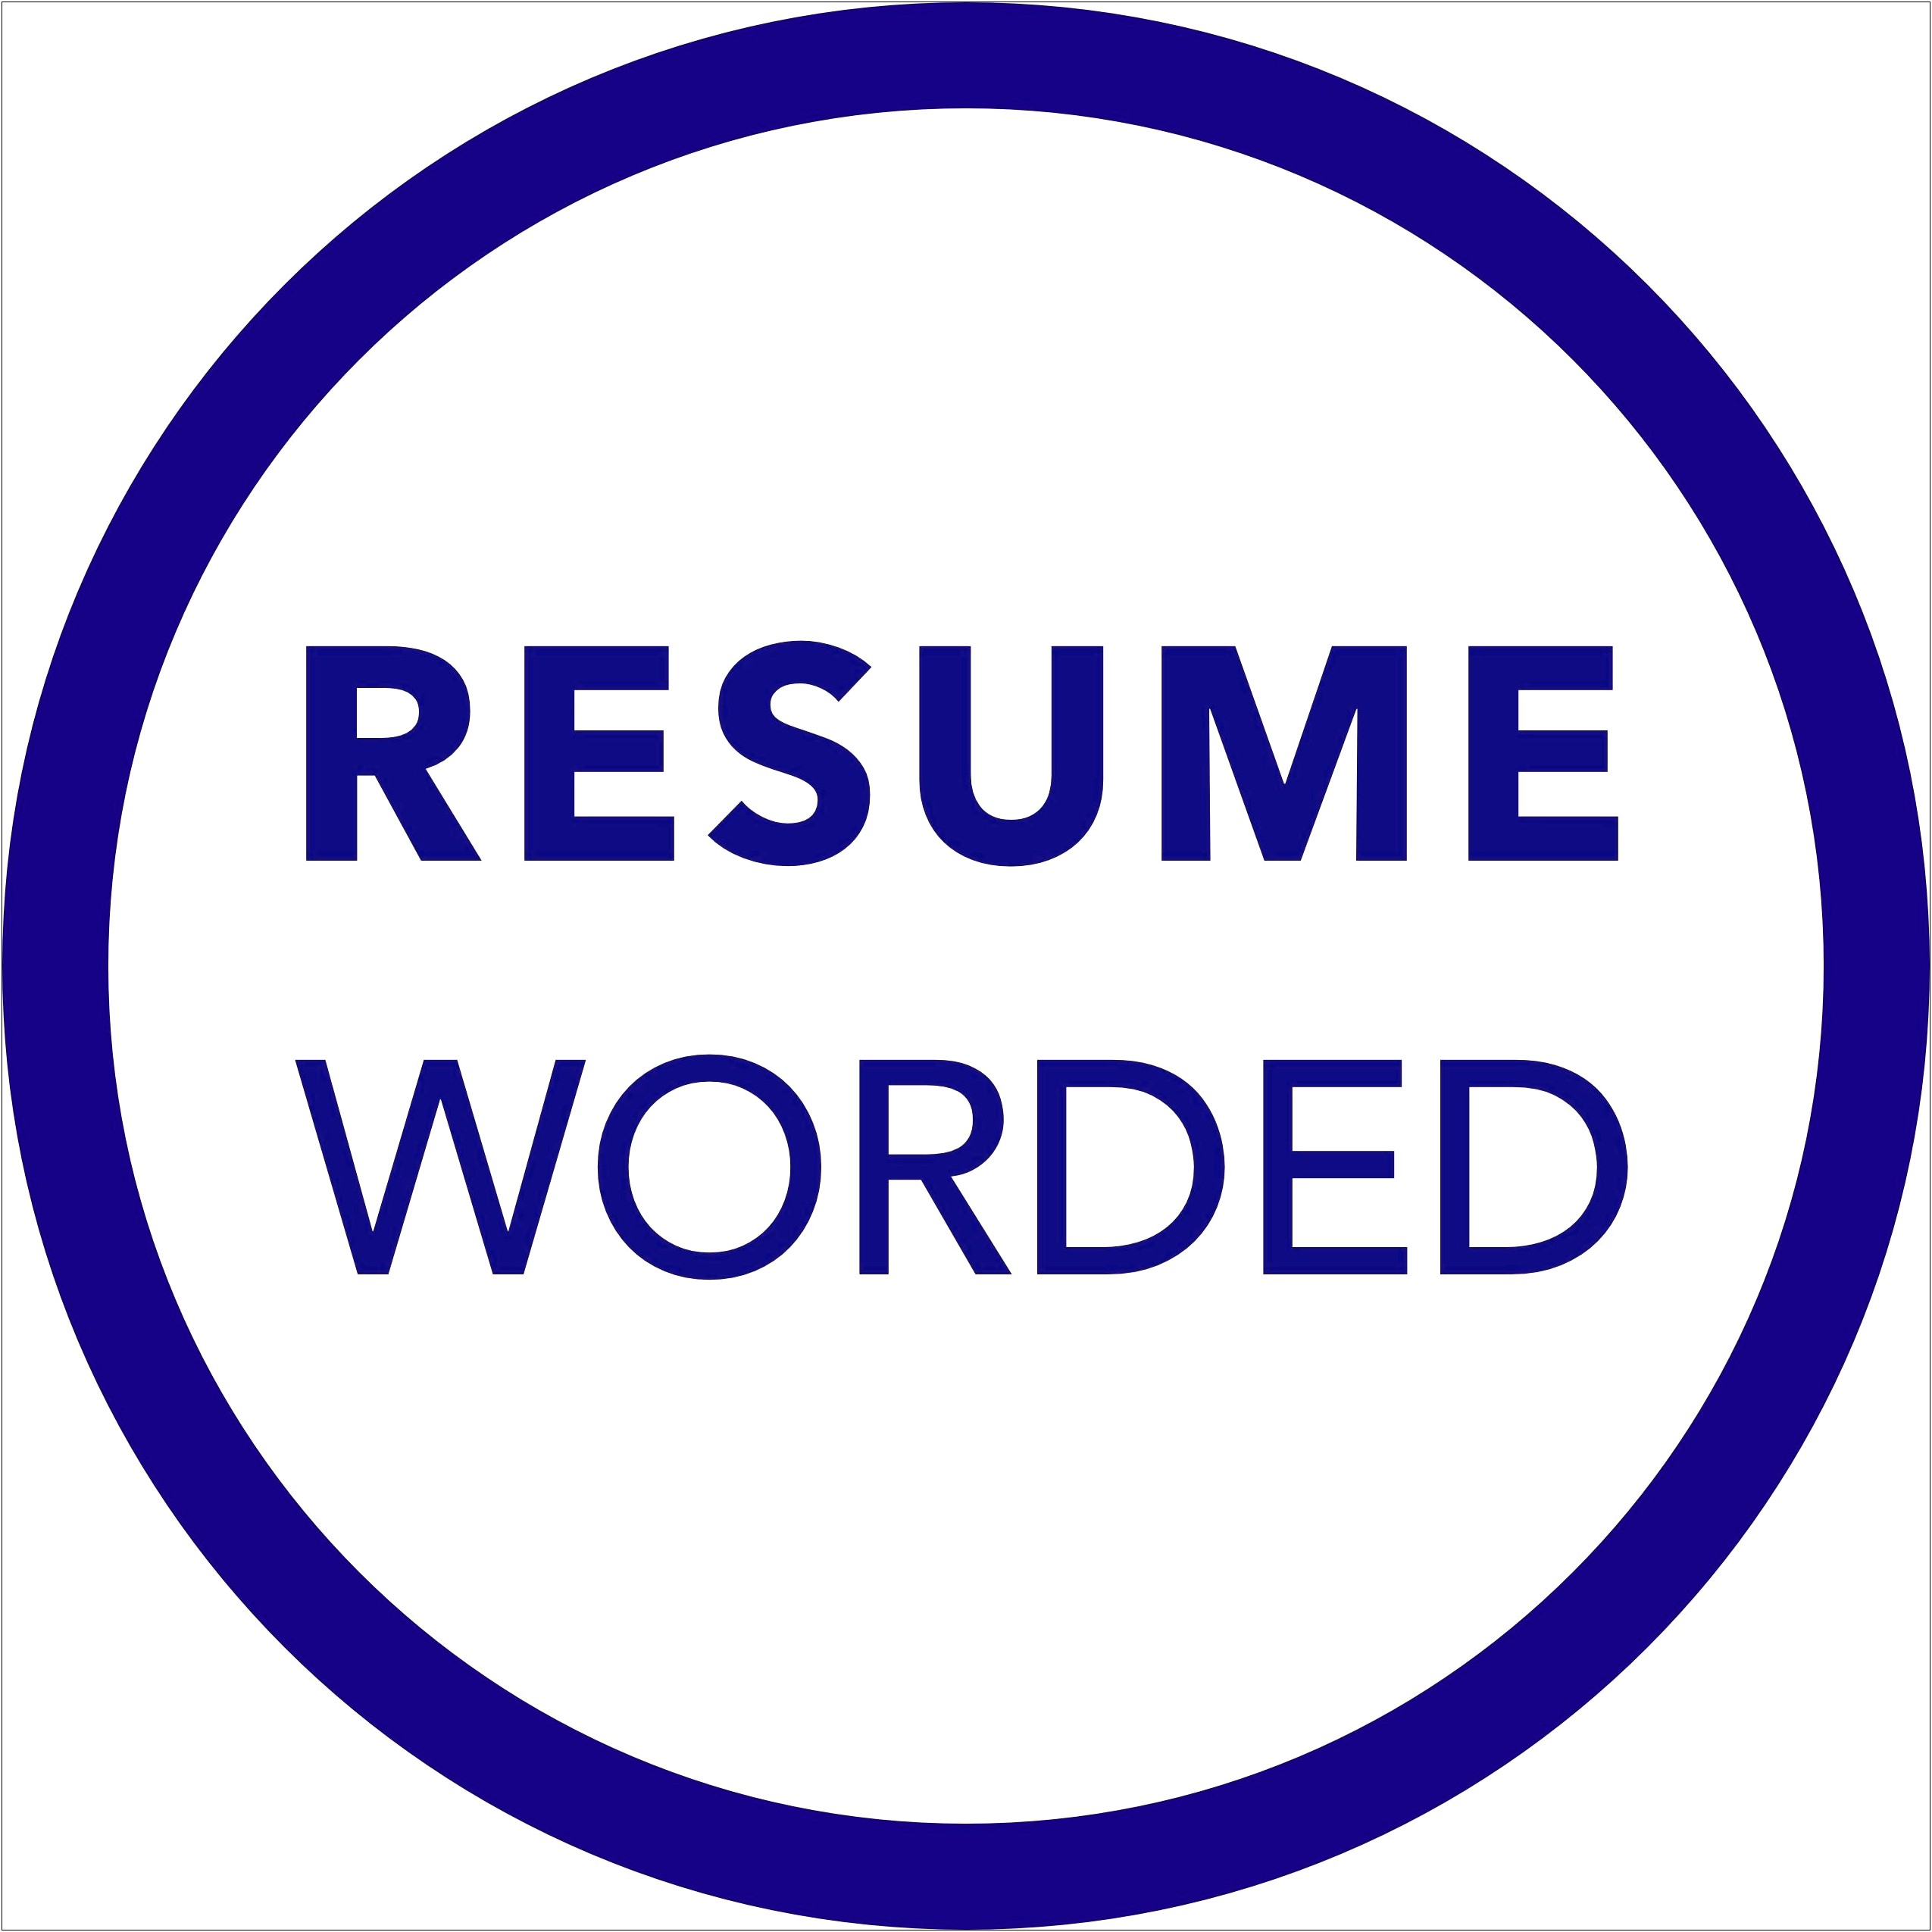 Resume Job Description In Past Tense